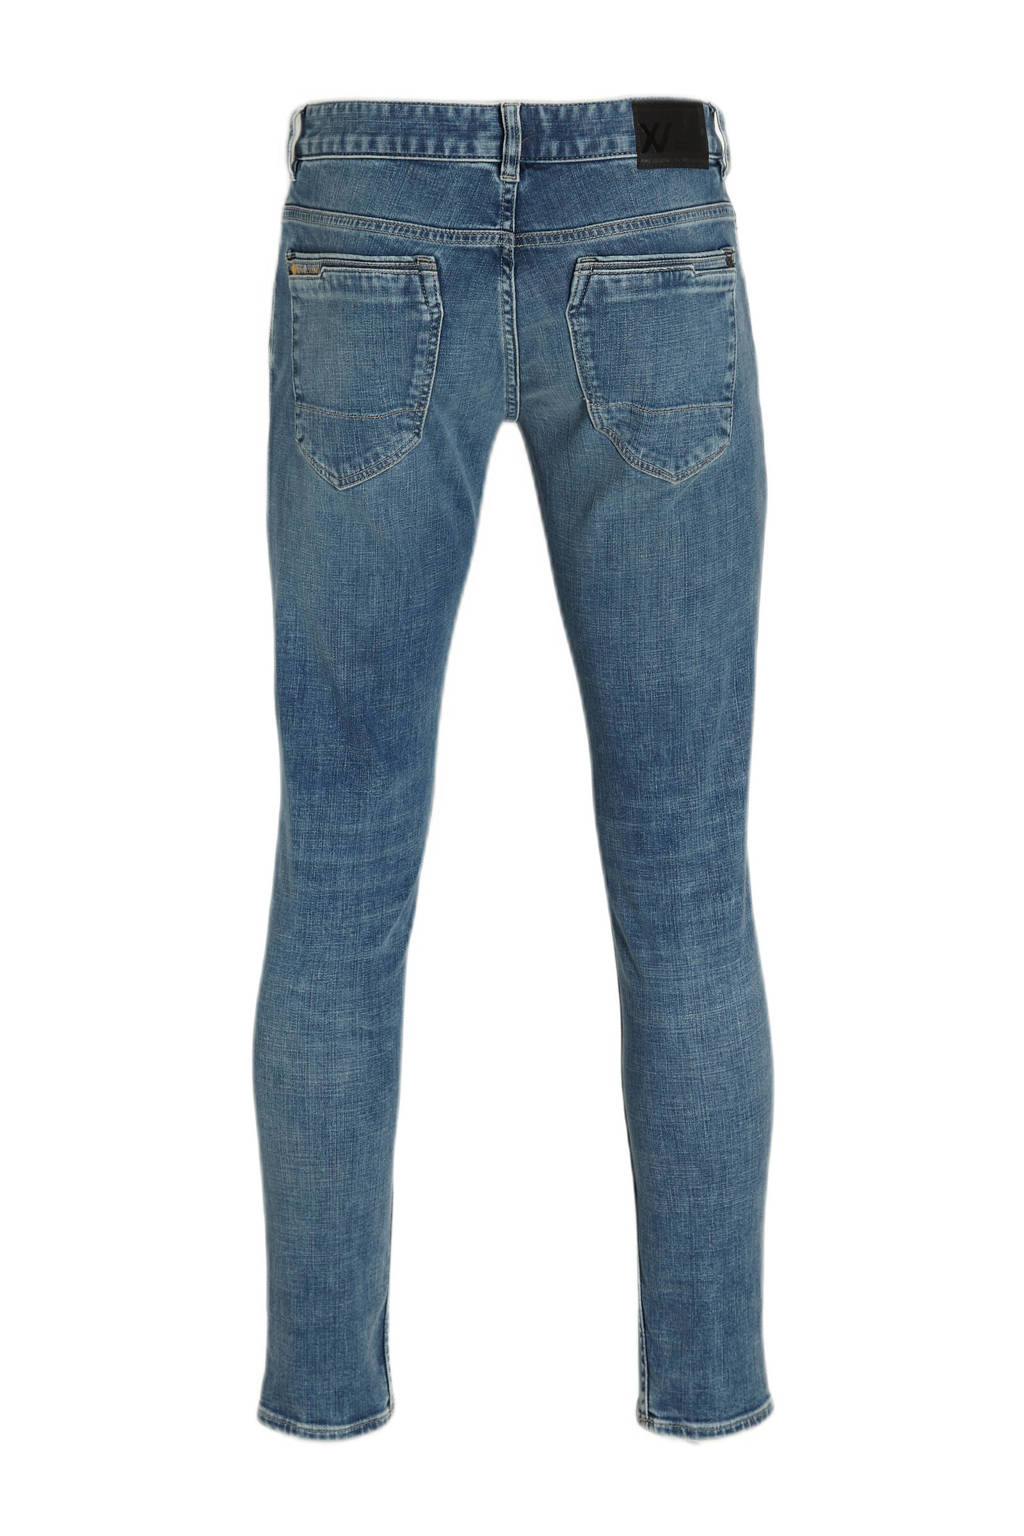 PME Legend slim fit blue River DENIM jeans XV bright air | Union